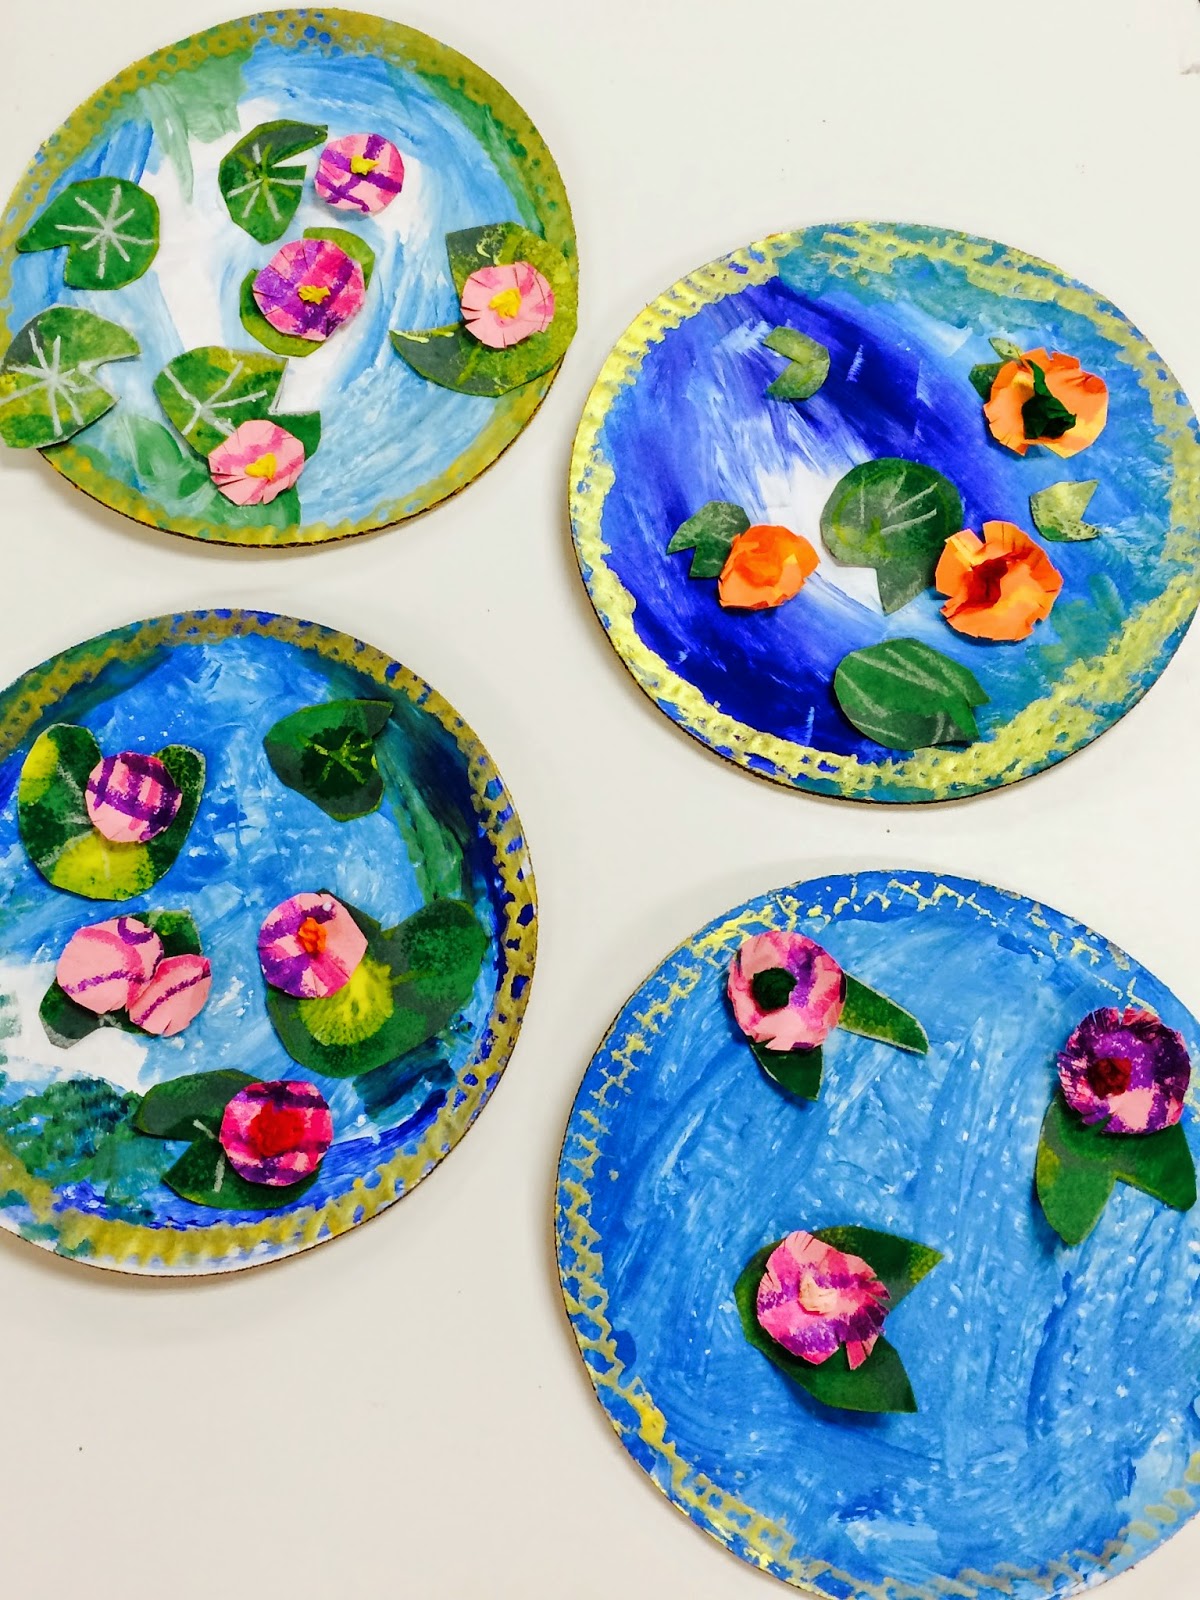 Study Impressionism for Kids, Monet's Pond - ActivitiesForKids.com